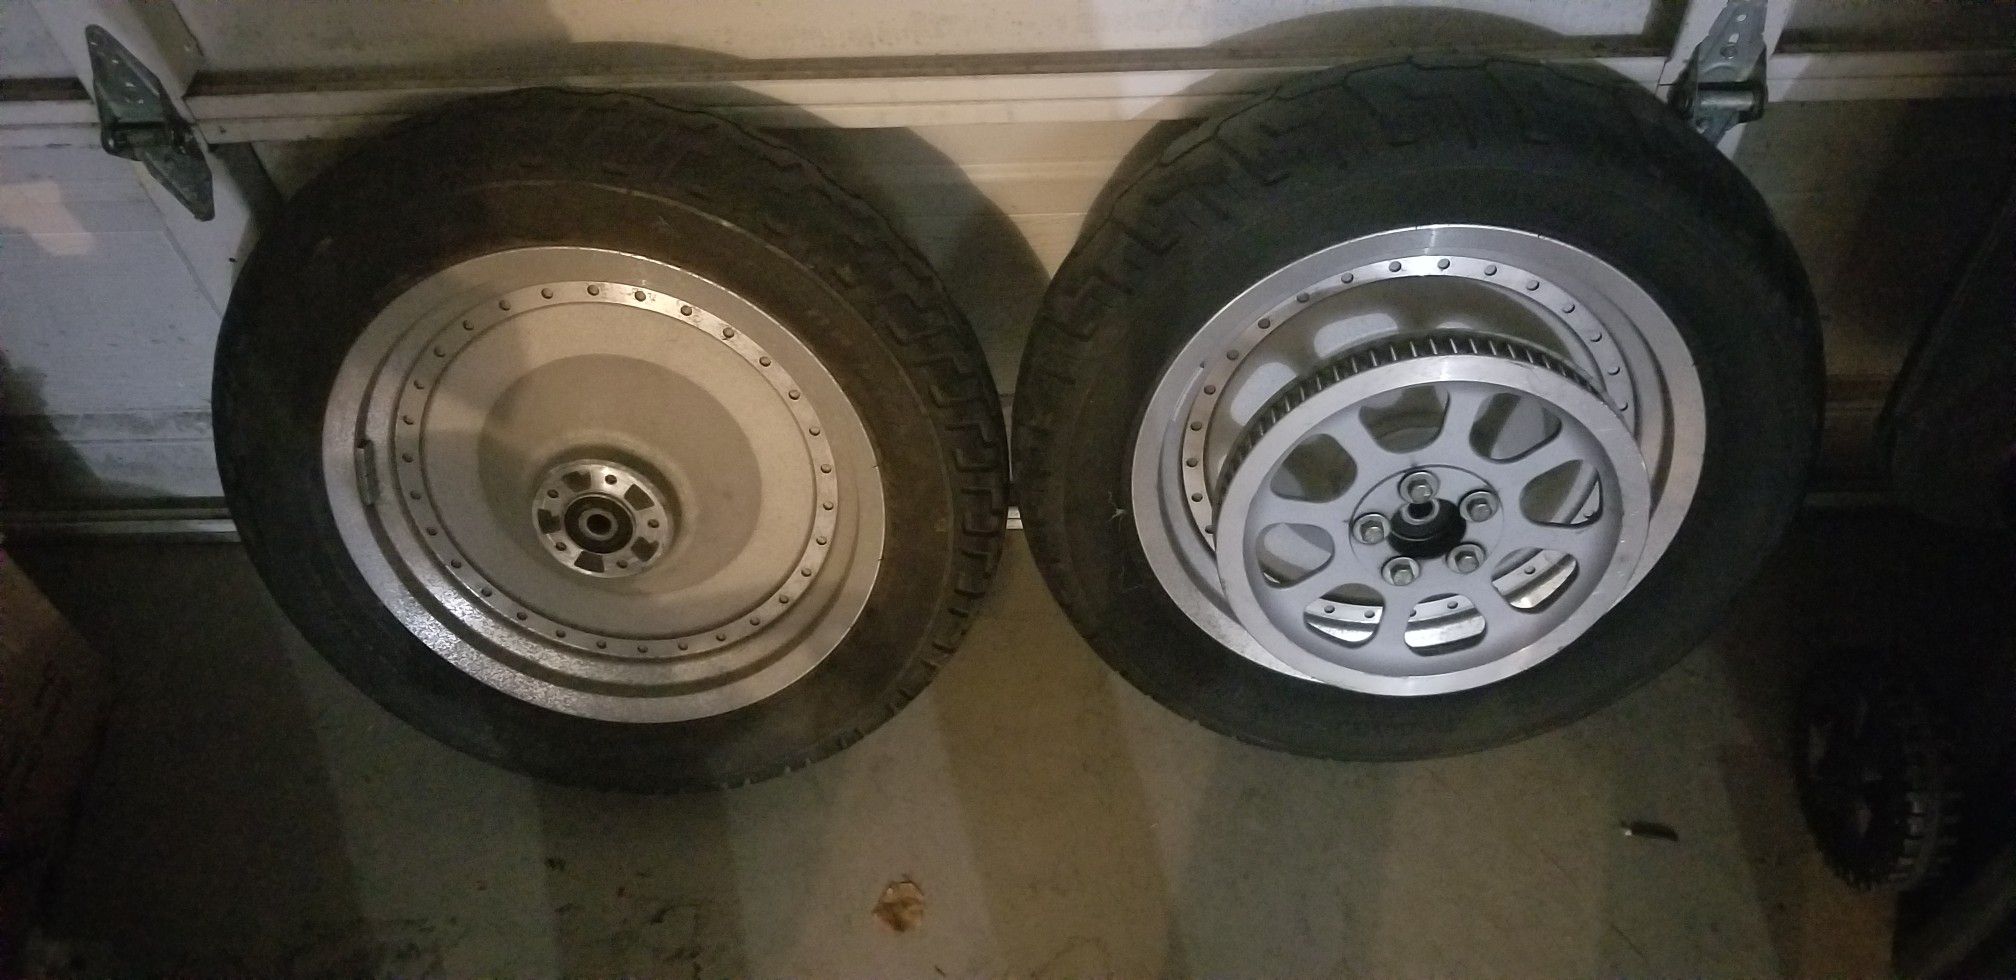 Harley davidson Fatboy wheels and tires